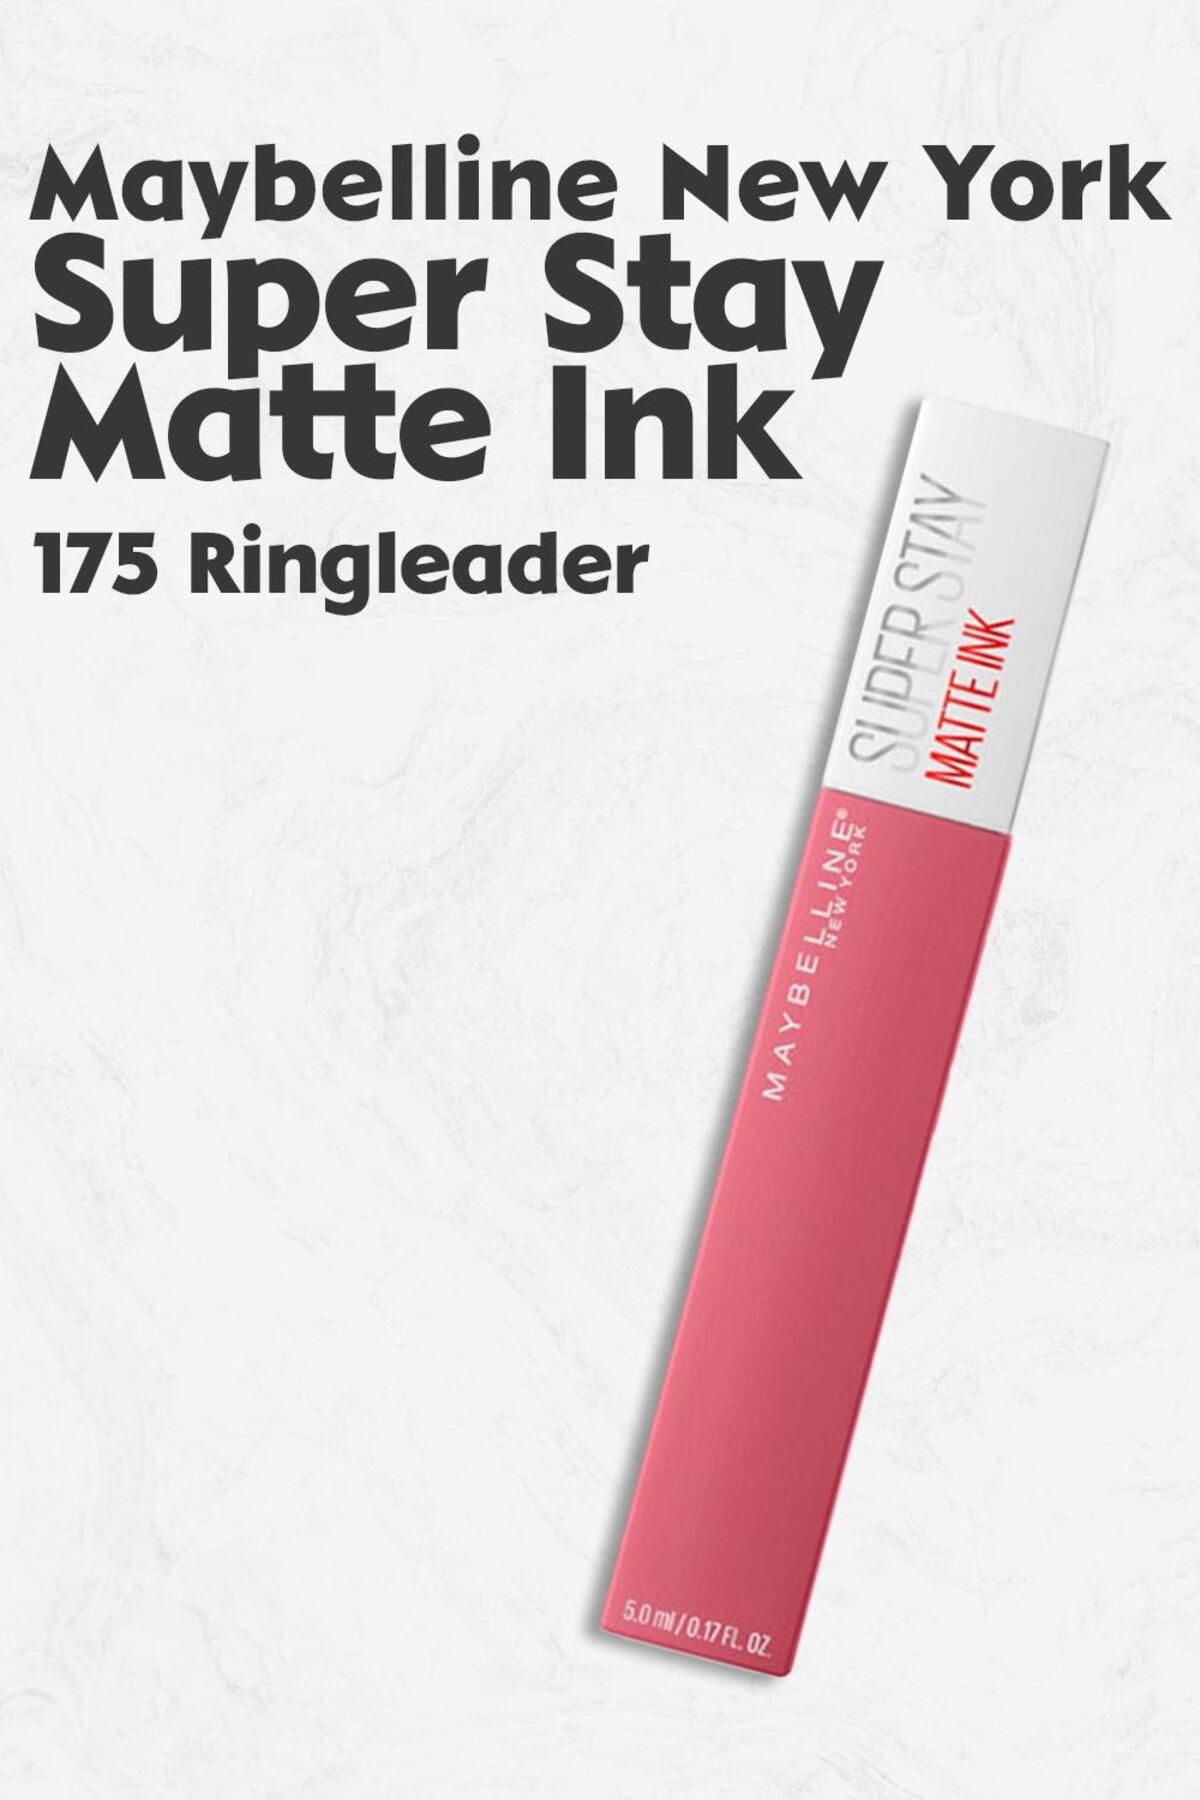 Maybelline New York Maybelline Super Stay Matte Ink 175 Ringleader